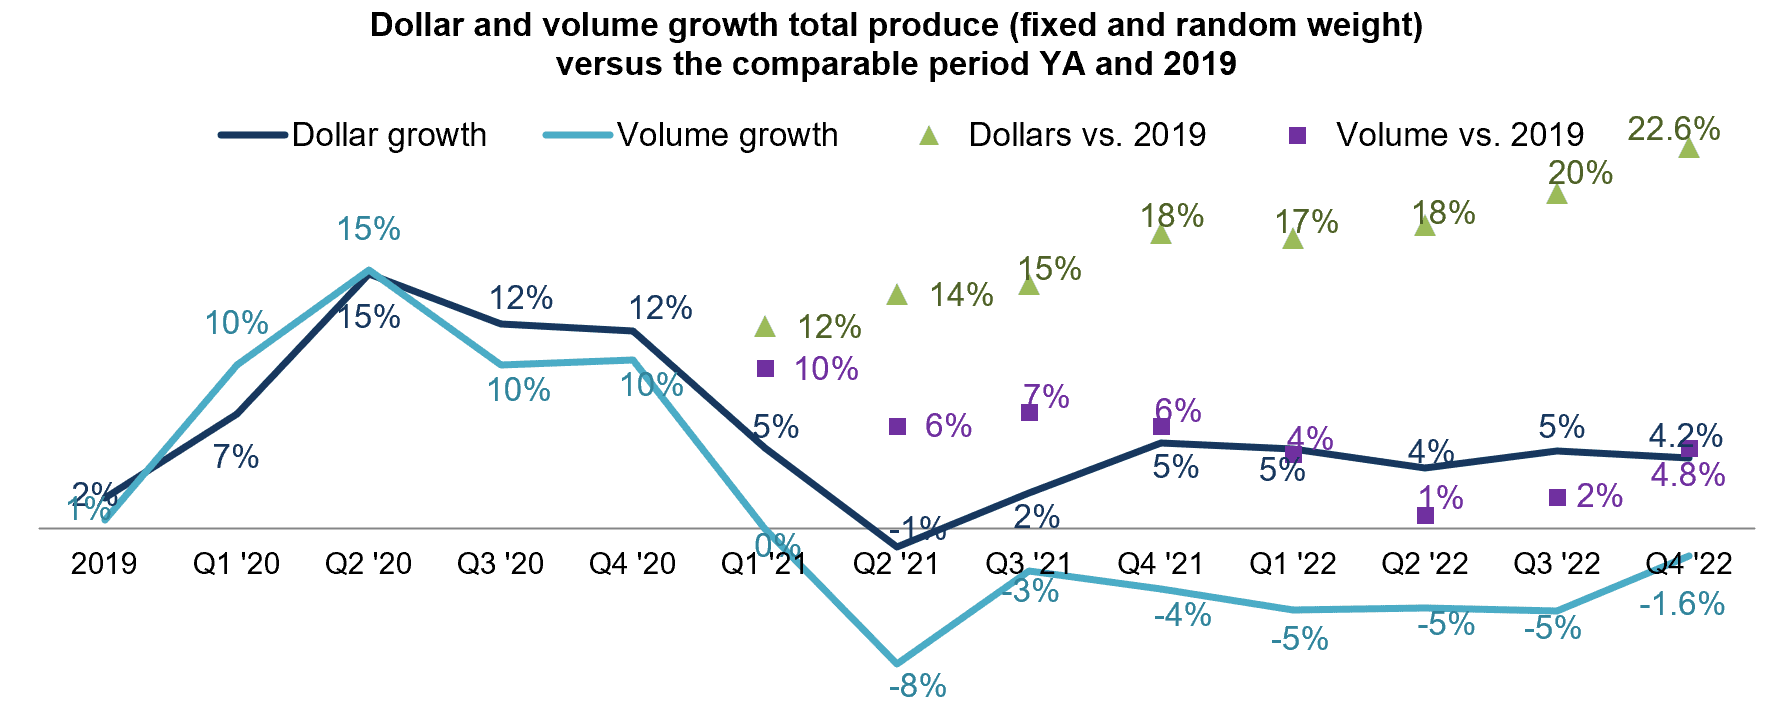 iri fresh produce dollars versus volume december 2022 inflation
